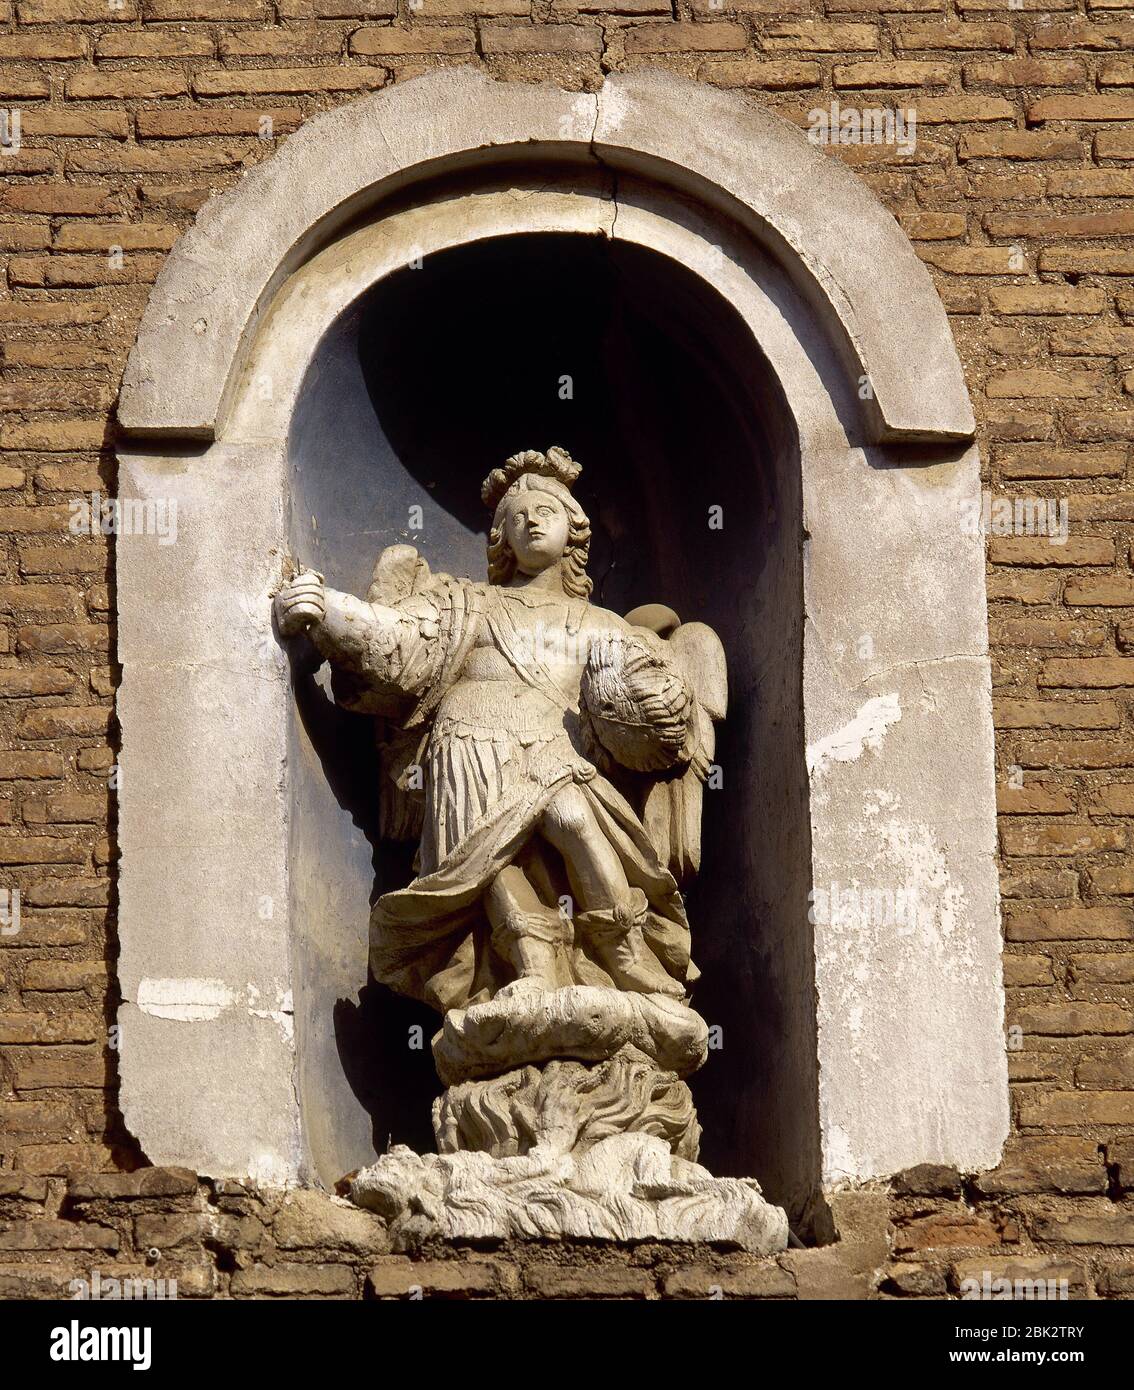 Saint Michael Archangel. Statue. Facade of the Church of Saint Michael the Archangel. Rincon del Soto, La Rioja, Spain. Stock Photo